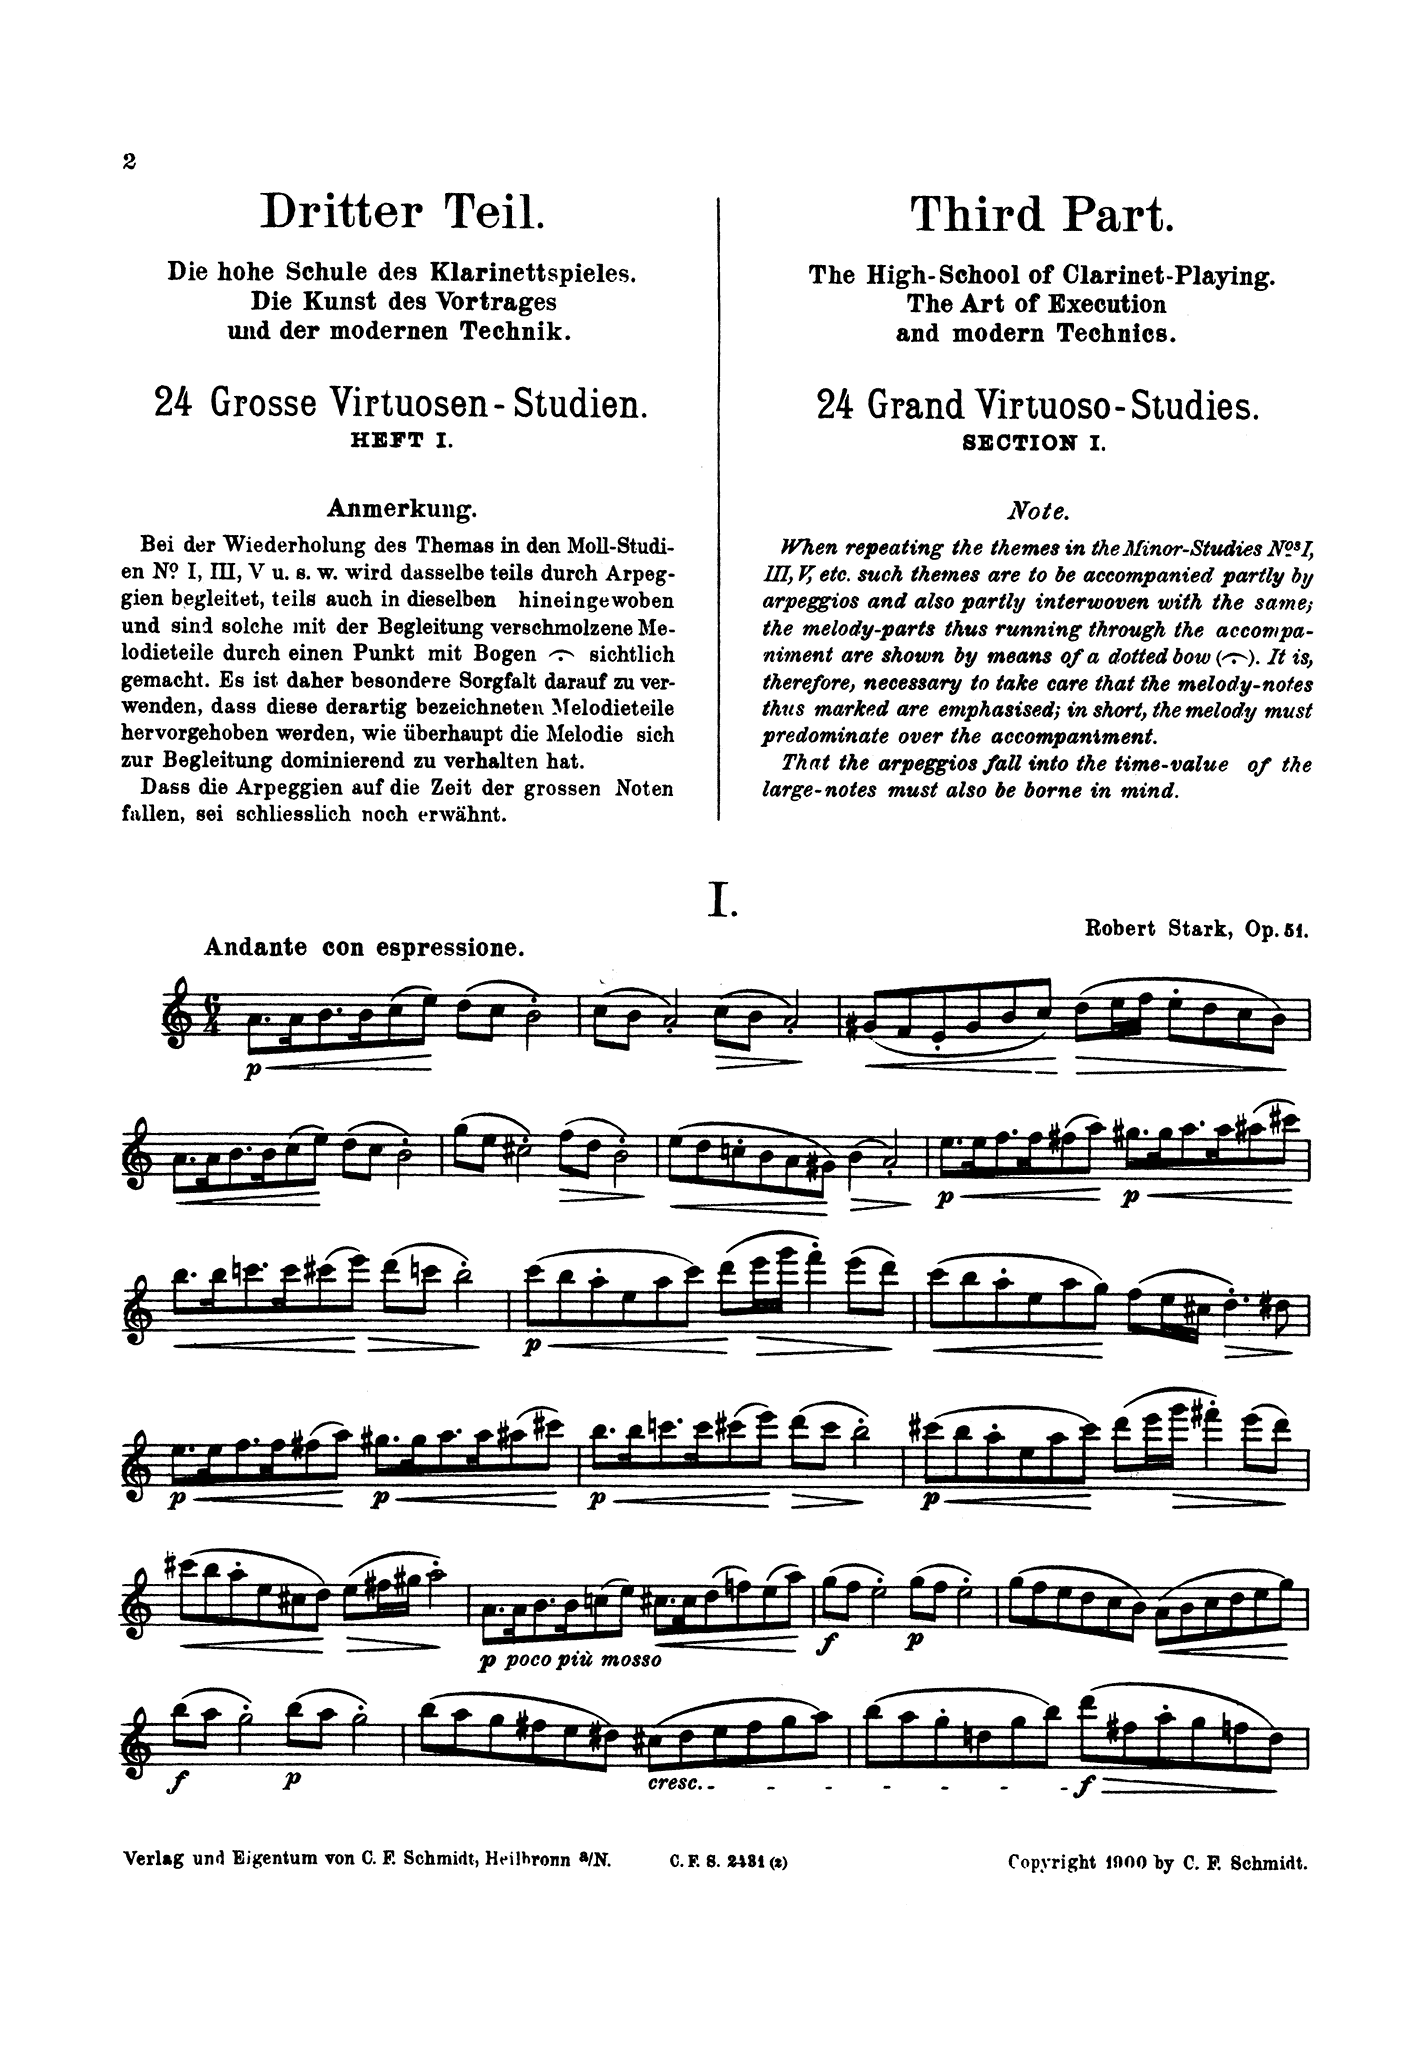 Stark Clarinet Method, Op. 51 24 Grand Virtuoso-Studies Book 1 page 2